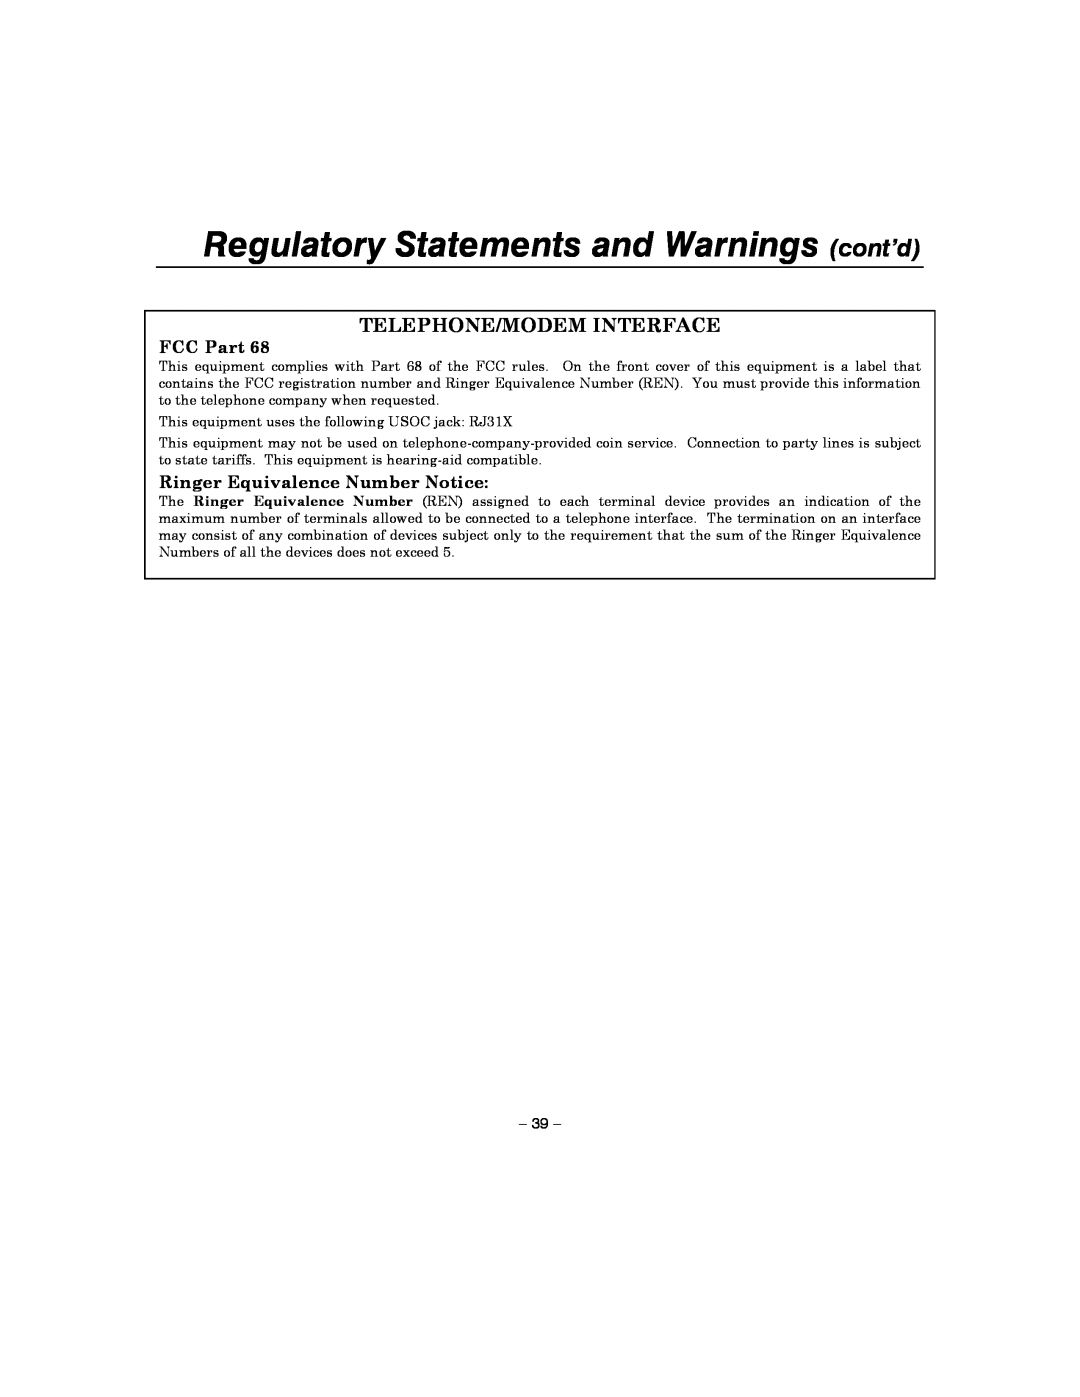 Honeywell 4110XM manual Regulatory Statements and Warnings cont’d, Telephone/Modem Interface 